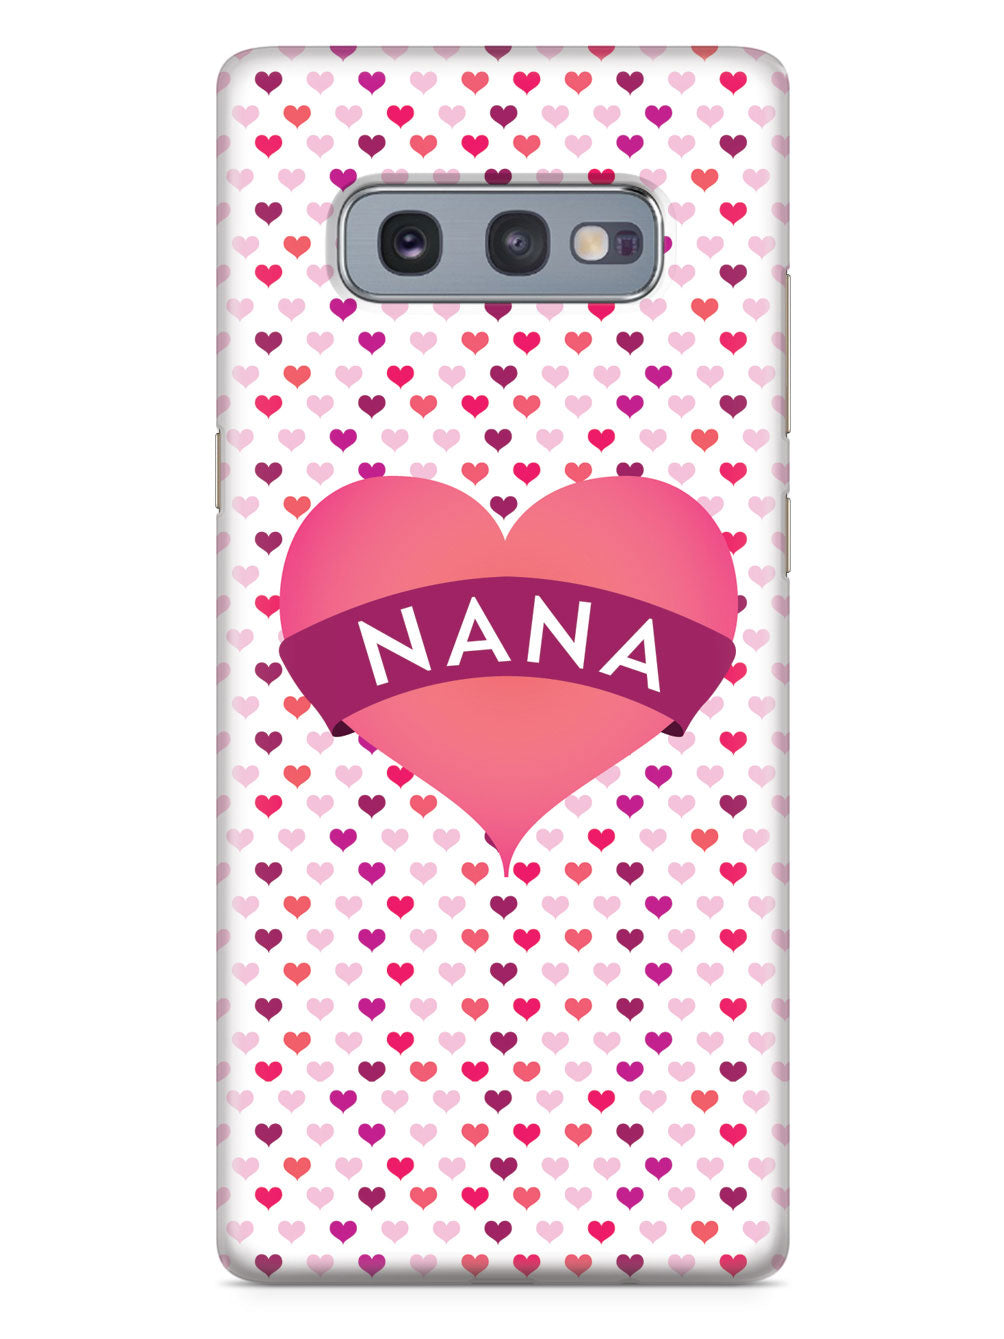 Nana Heart for Grandma Case